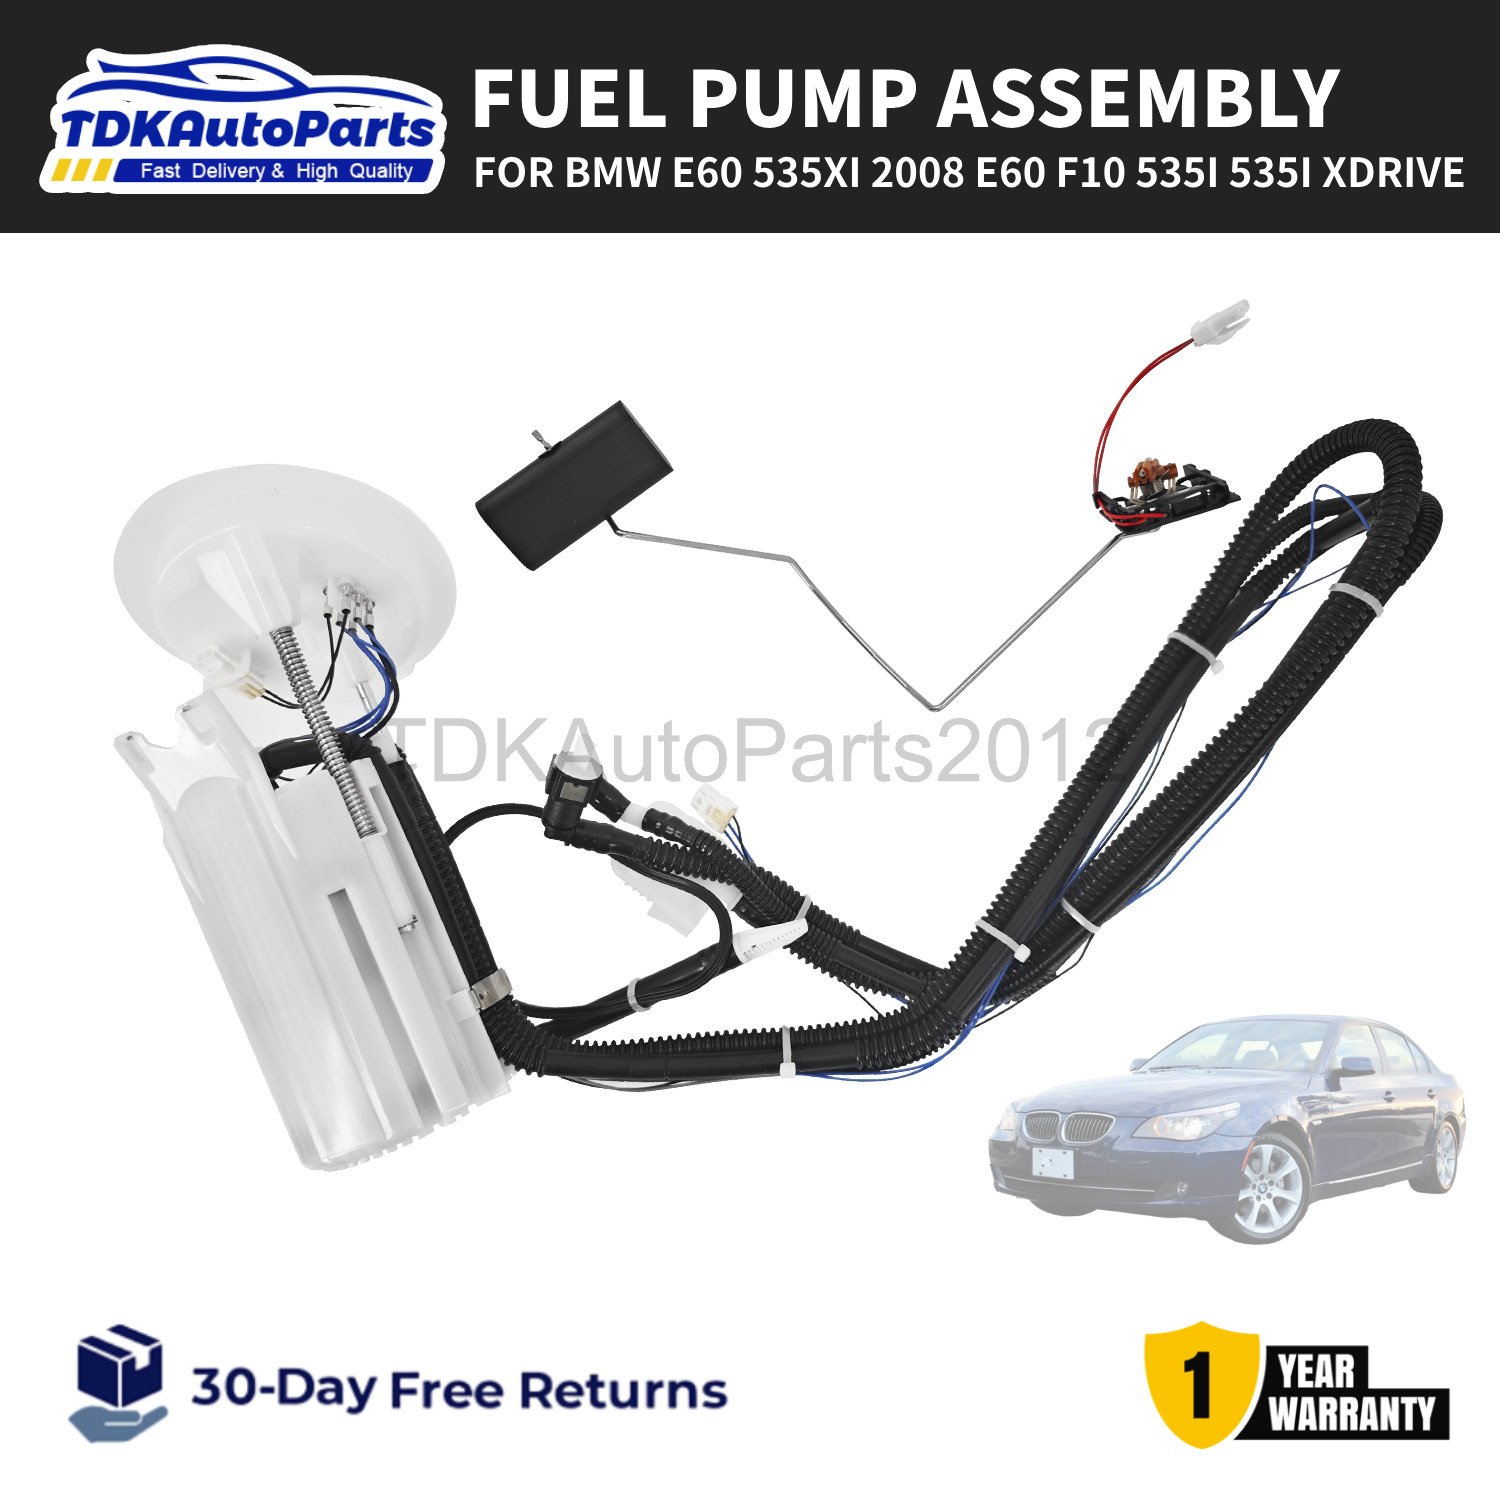 Fuel Pump Assembly 16117373521 for BMW E60 535xi 2008 E60 F10 535i 535i 3.0L